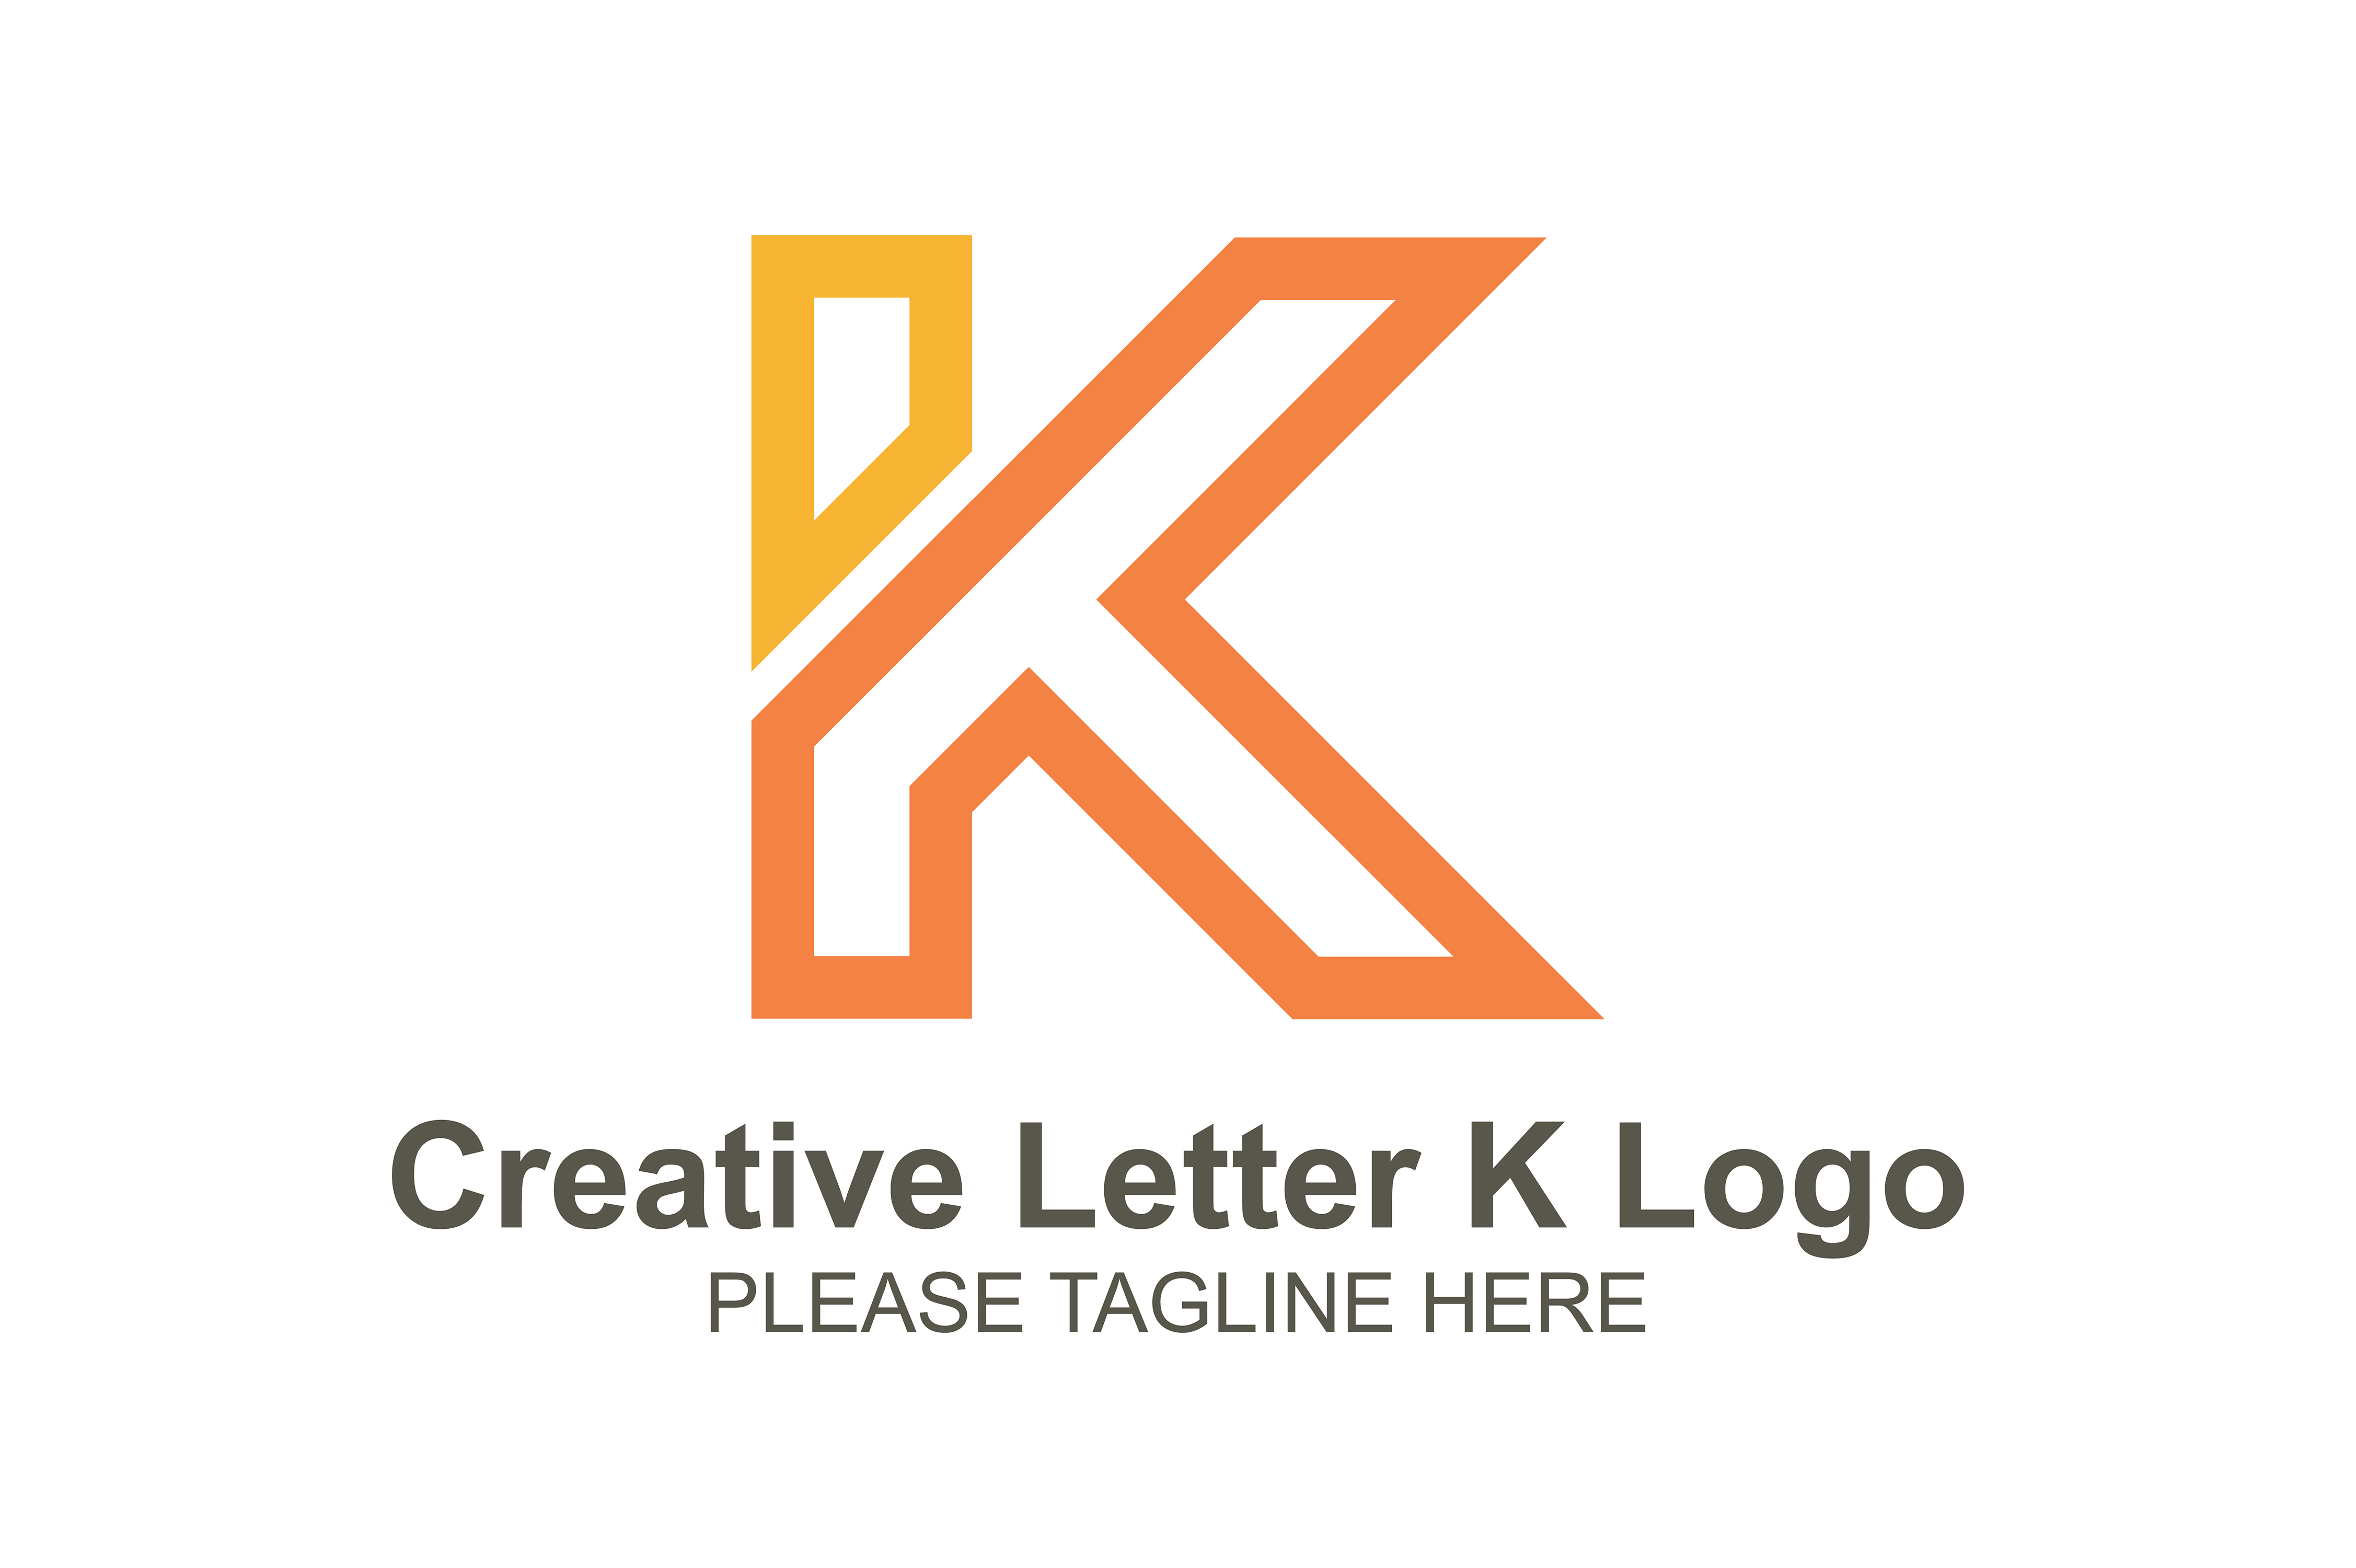 Creative Letter K Logo Graphic by merahcasper · Creative Fabrica